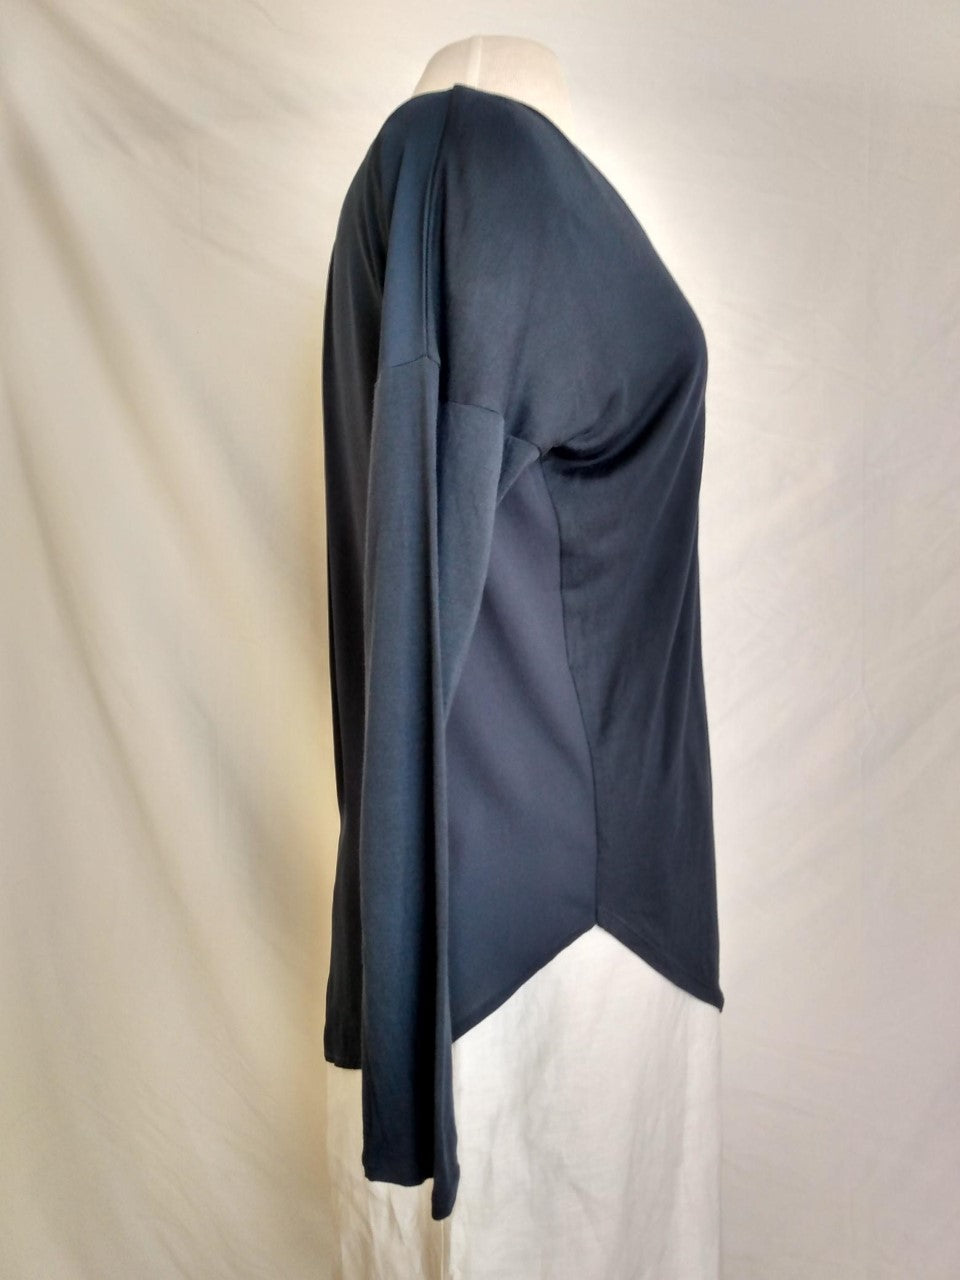 Halston Heritage black Long Sleeve Shirt - L